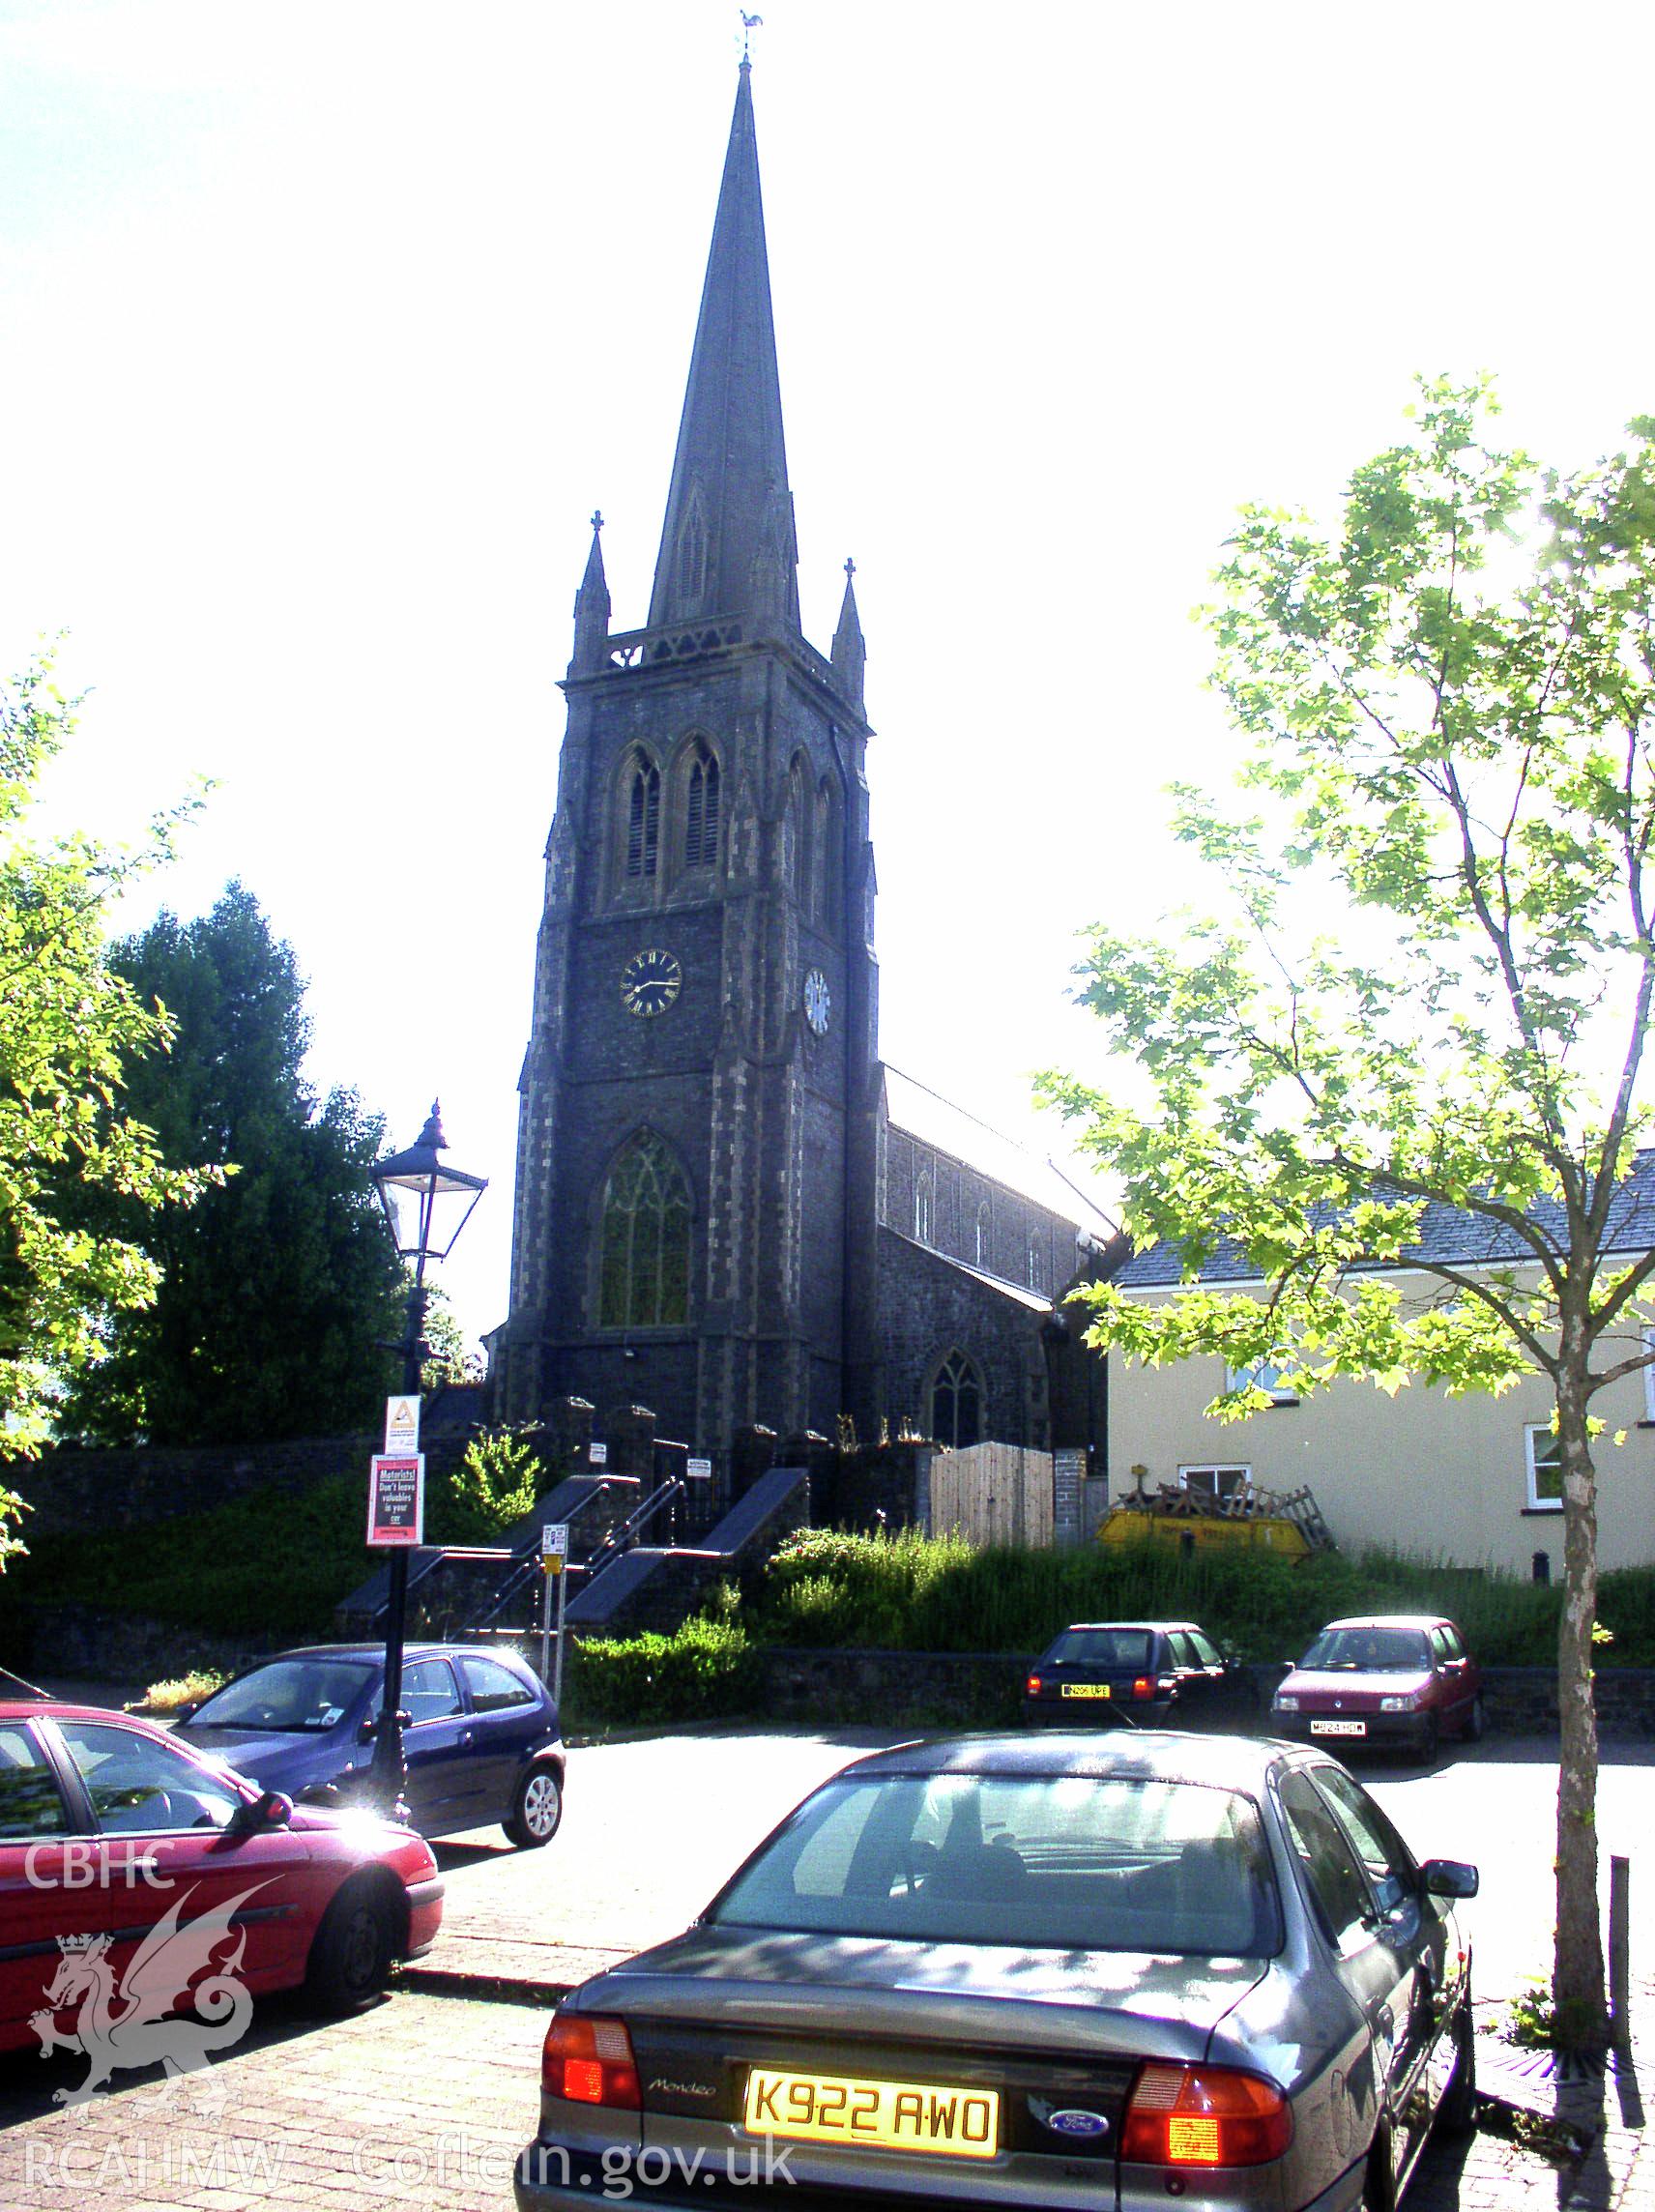 Colour digital photograph showing the exterior of St. Elvans Church, Aberdare; Glamorgan.